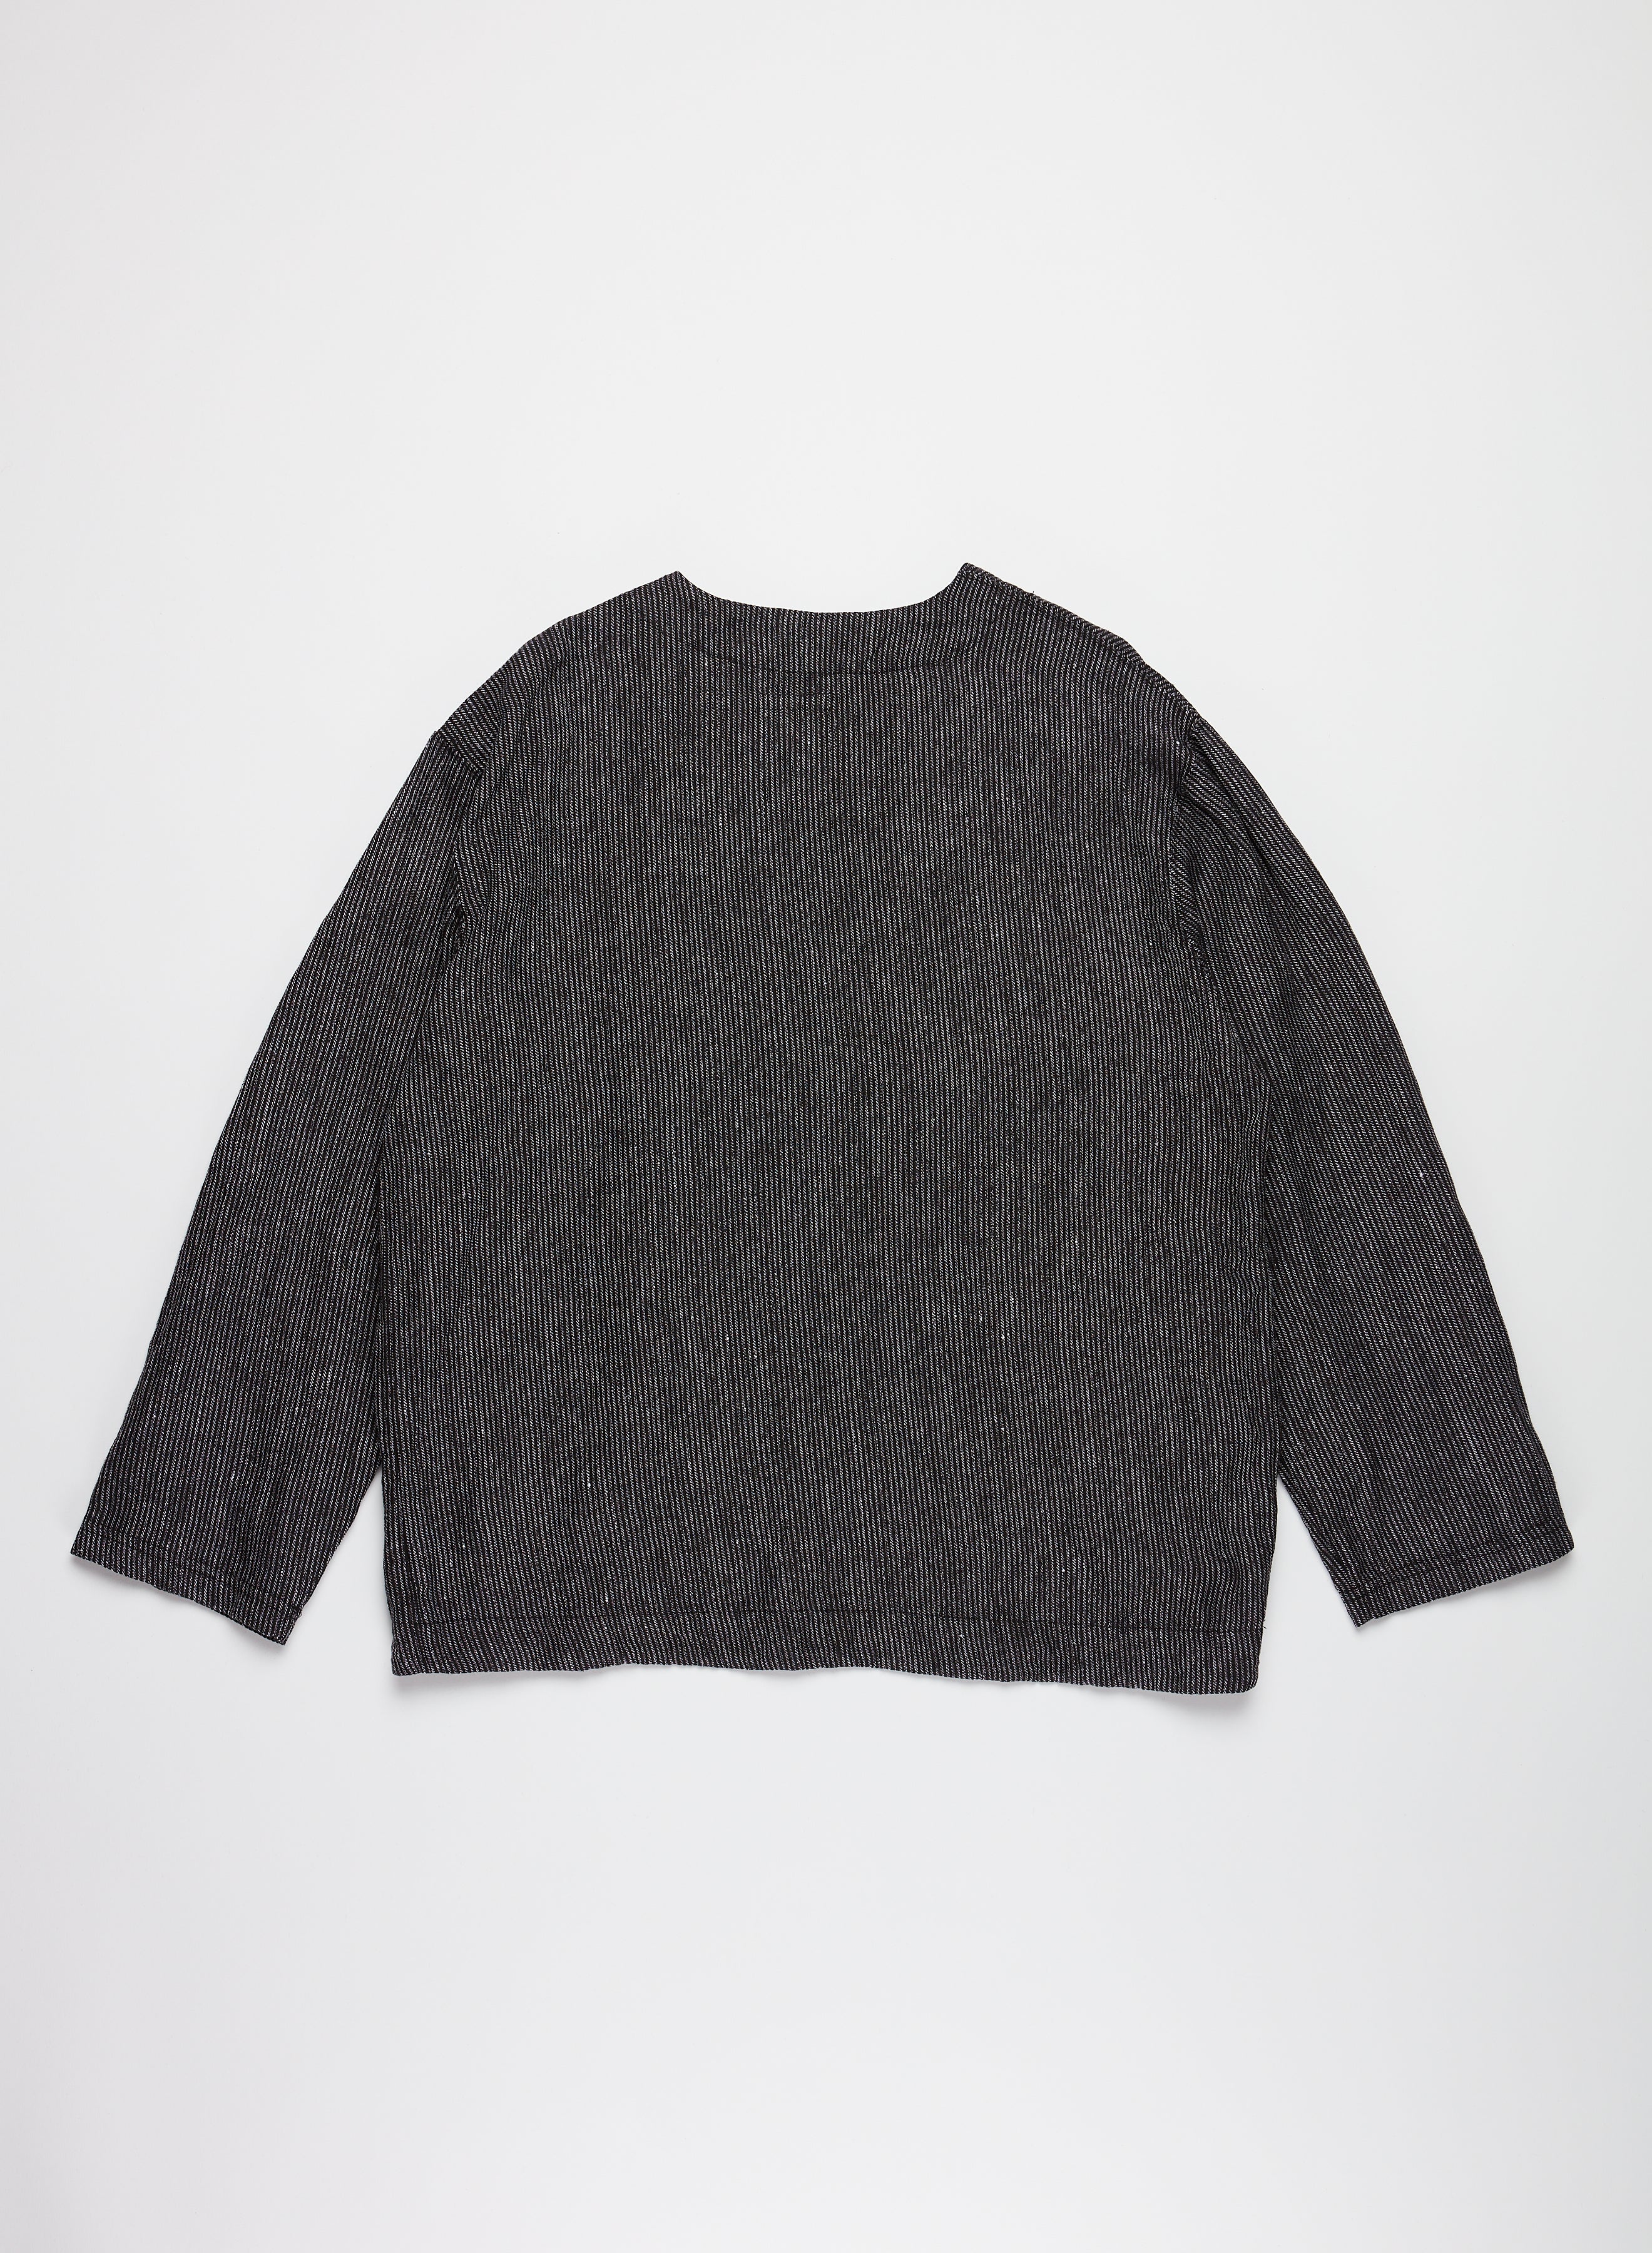 Engineered Garments Cutaway Jacket - Black/Grey Linen Stripe